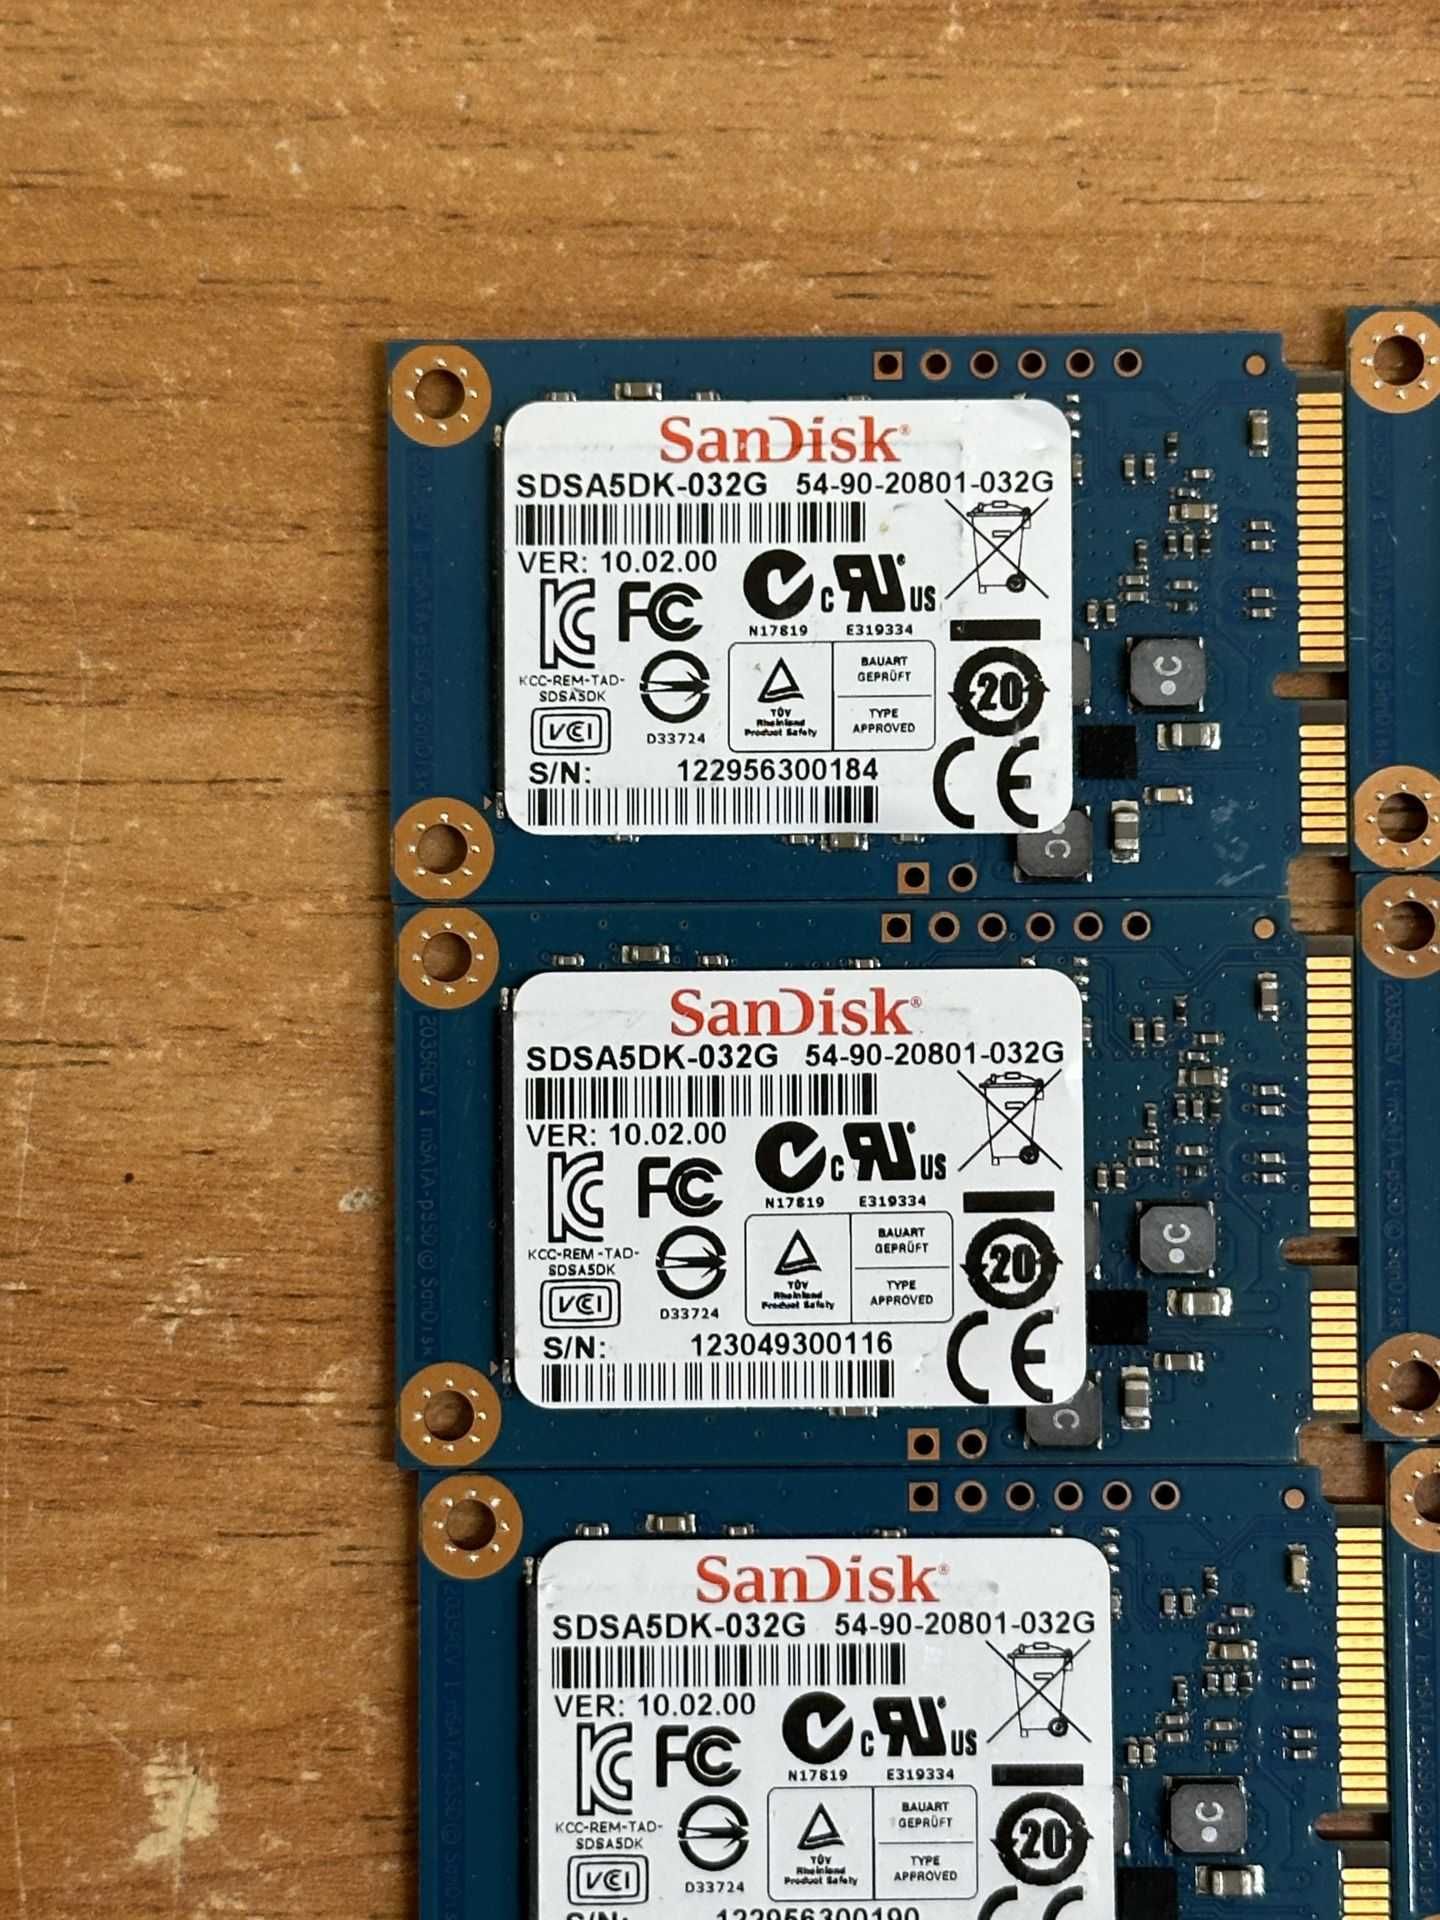 SanDisk SSD mSATA 32gb